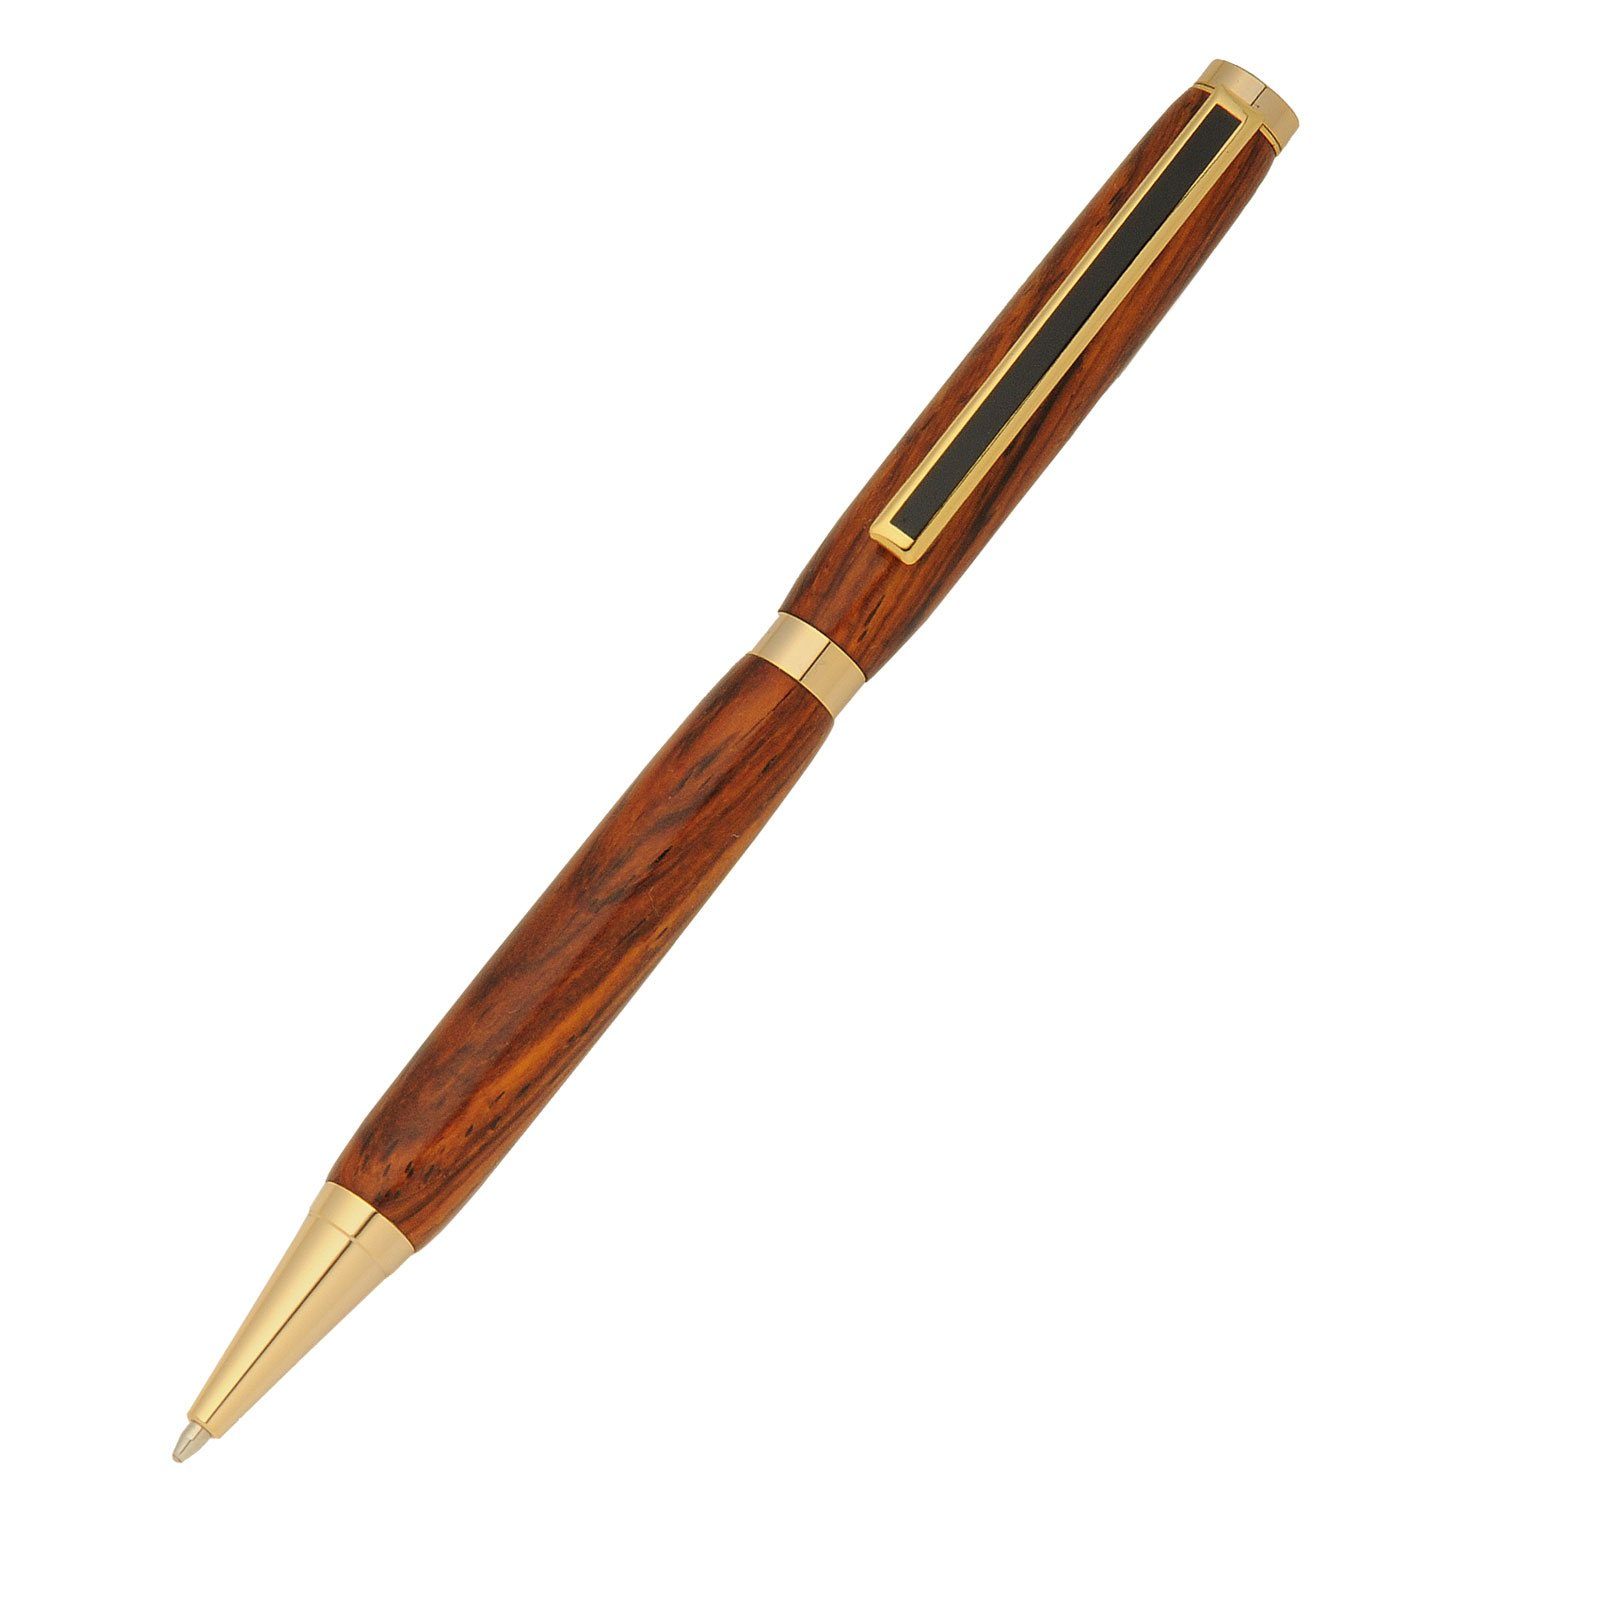 Stylus Slimline and Broad. Cross style pen refills suitable for pen types Slimline Blue